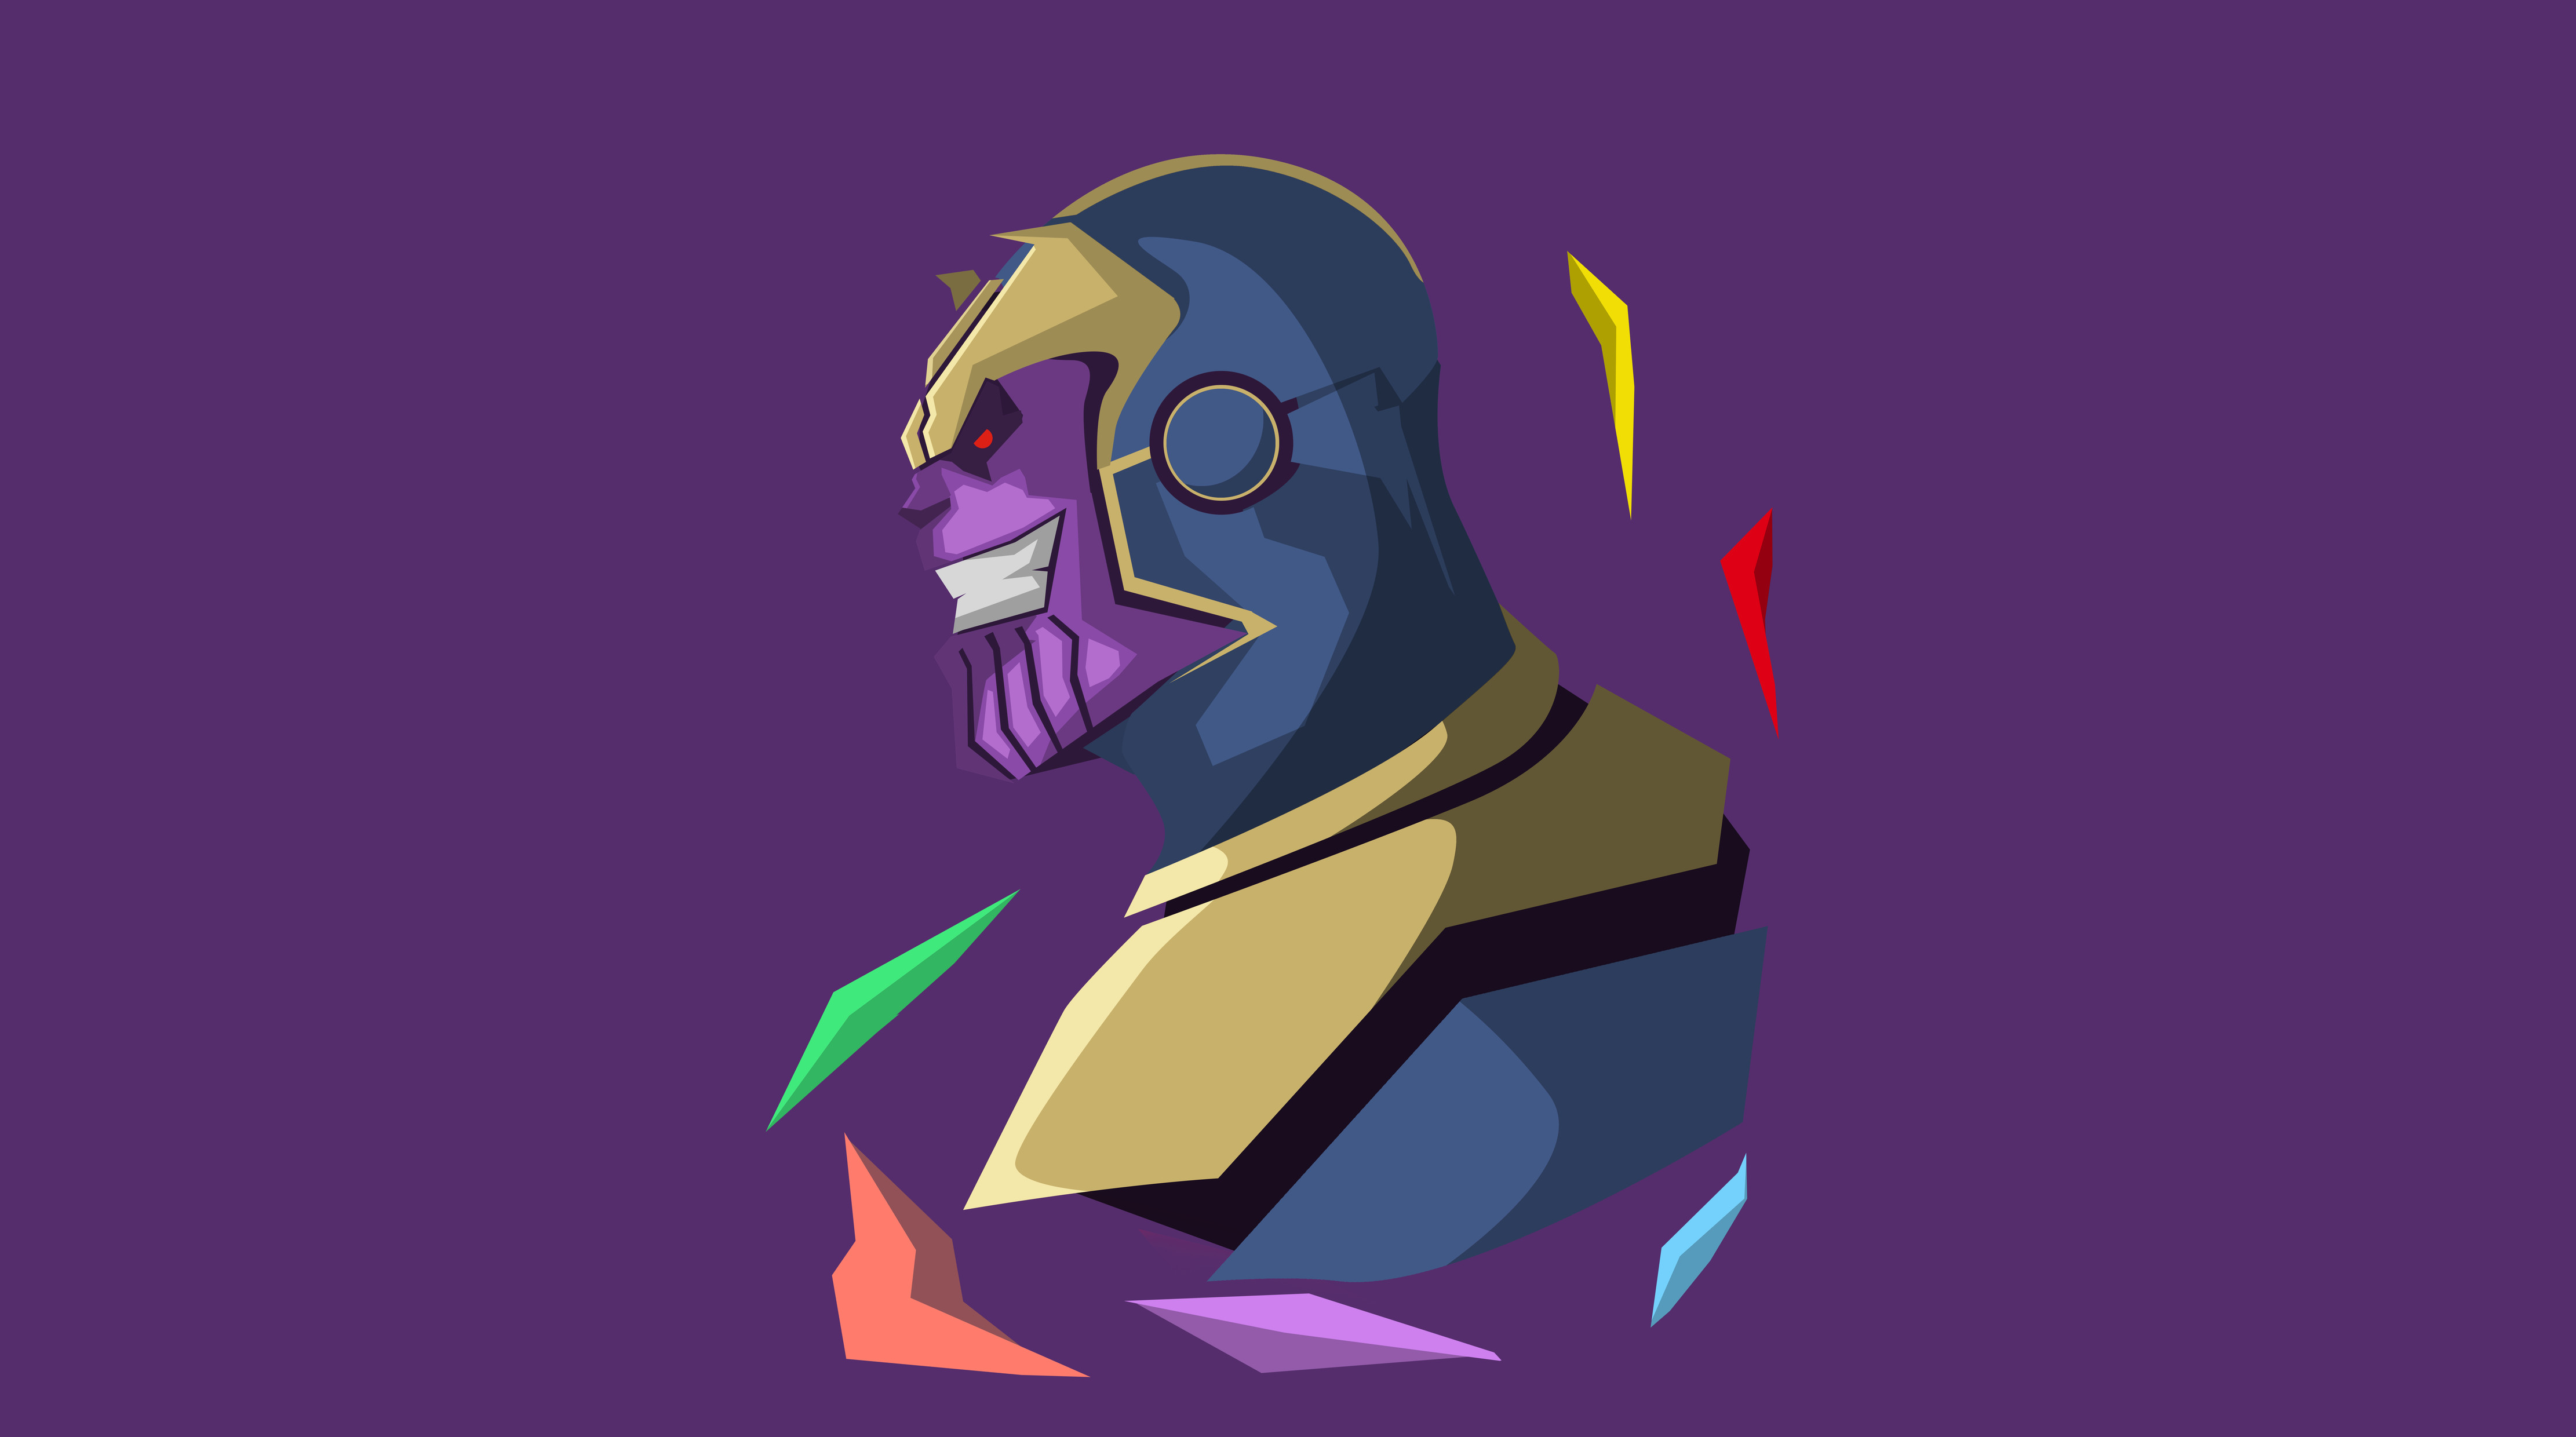 [18+] Thanos Cartoon Wallpapers on WallpaperSafari